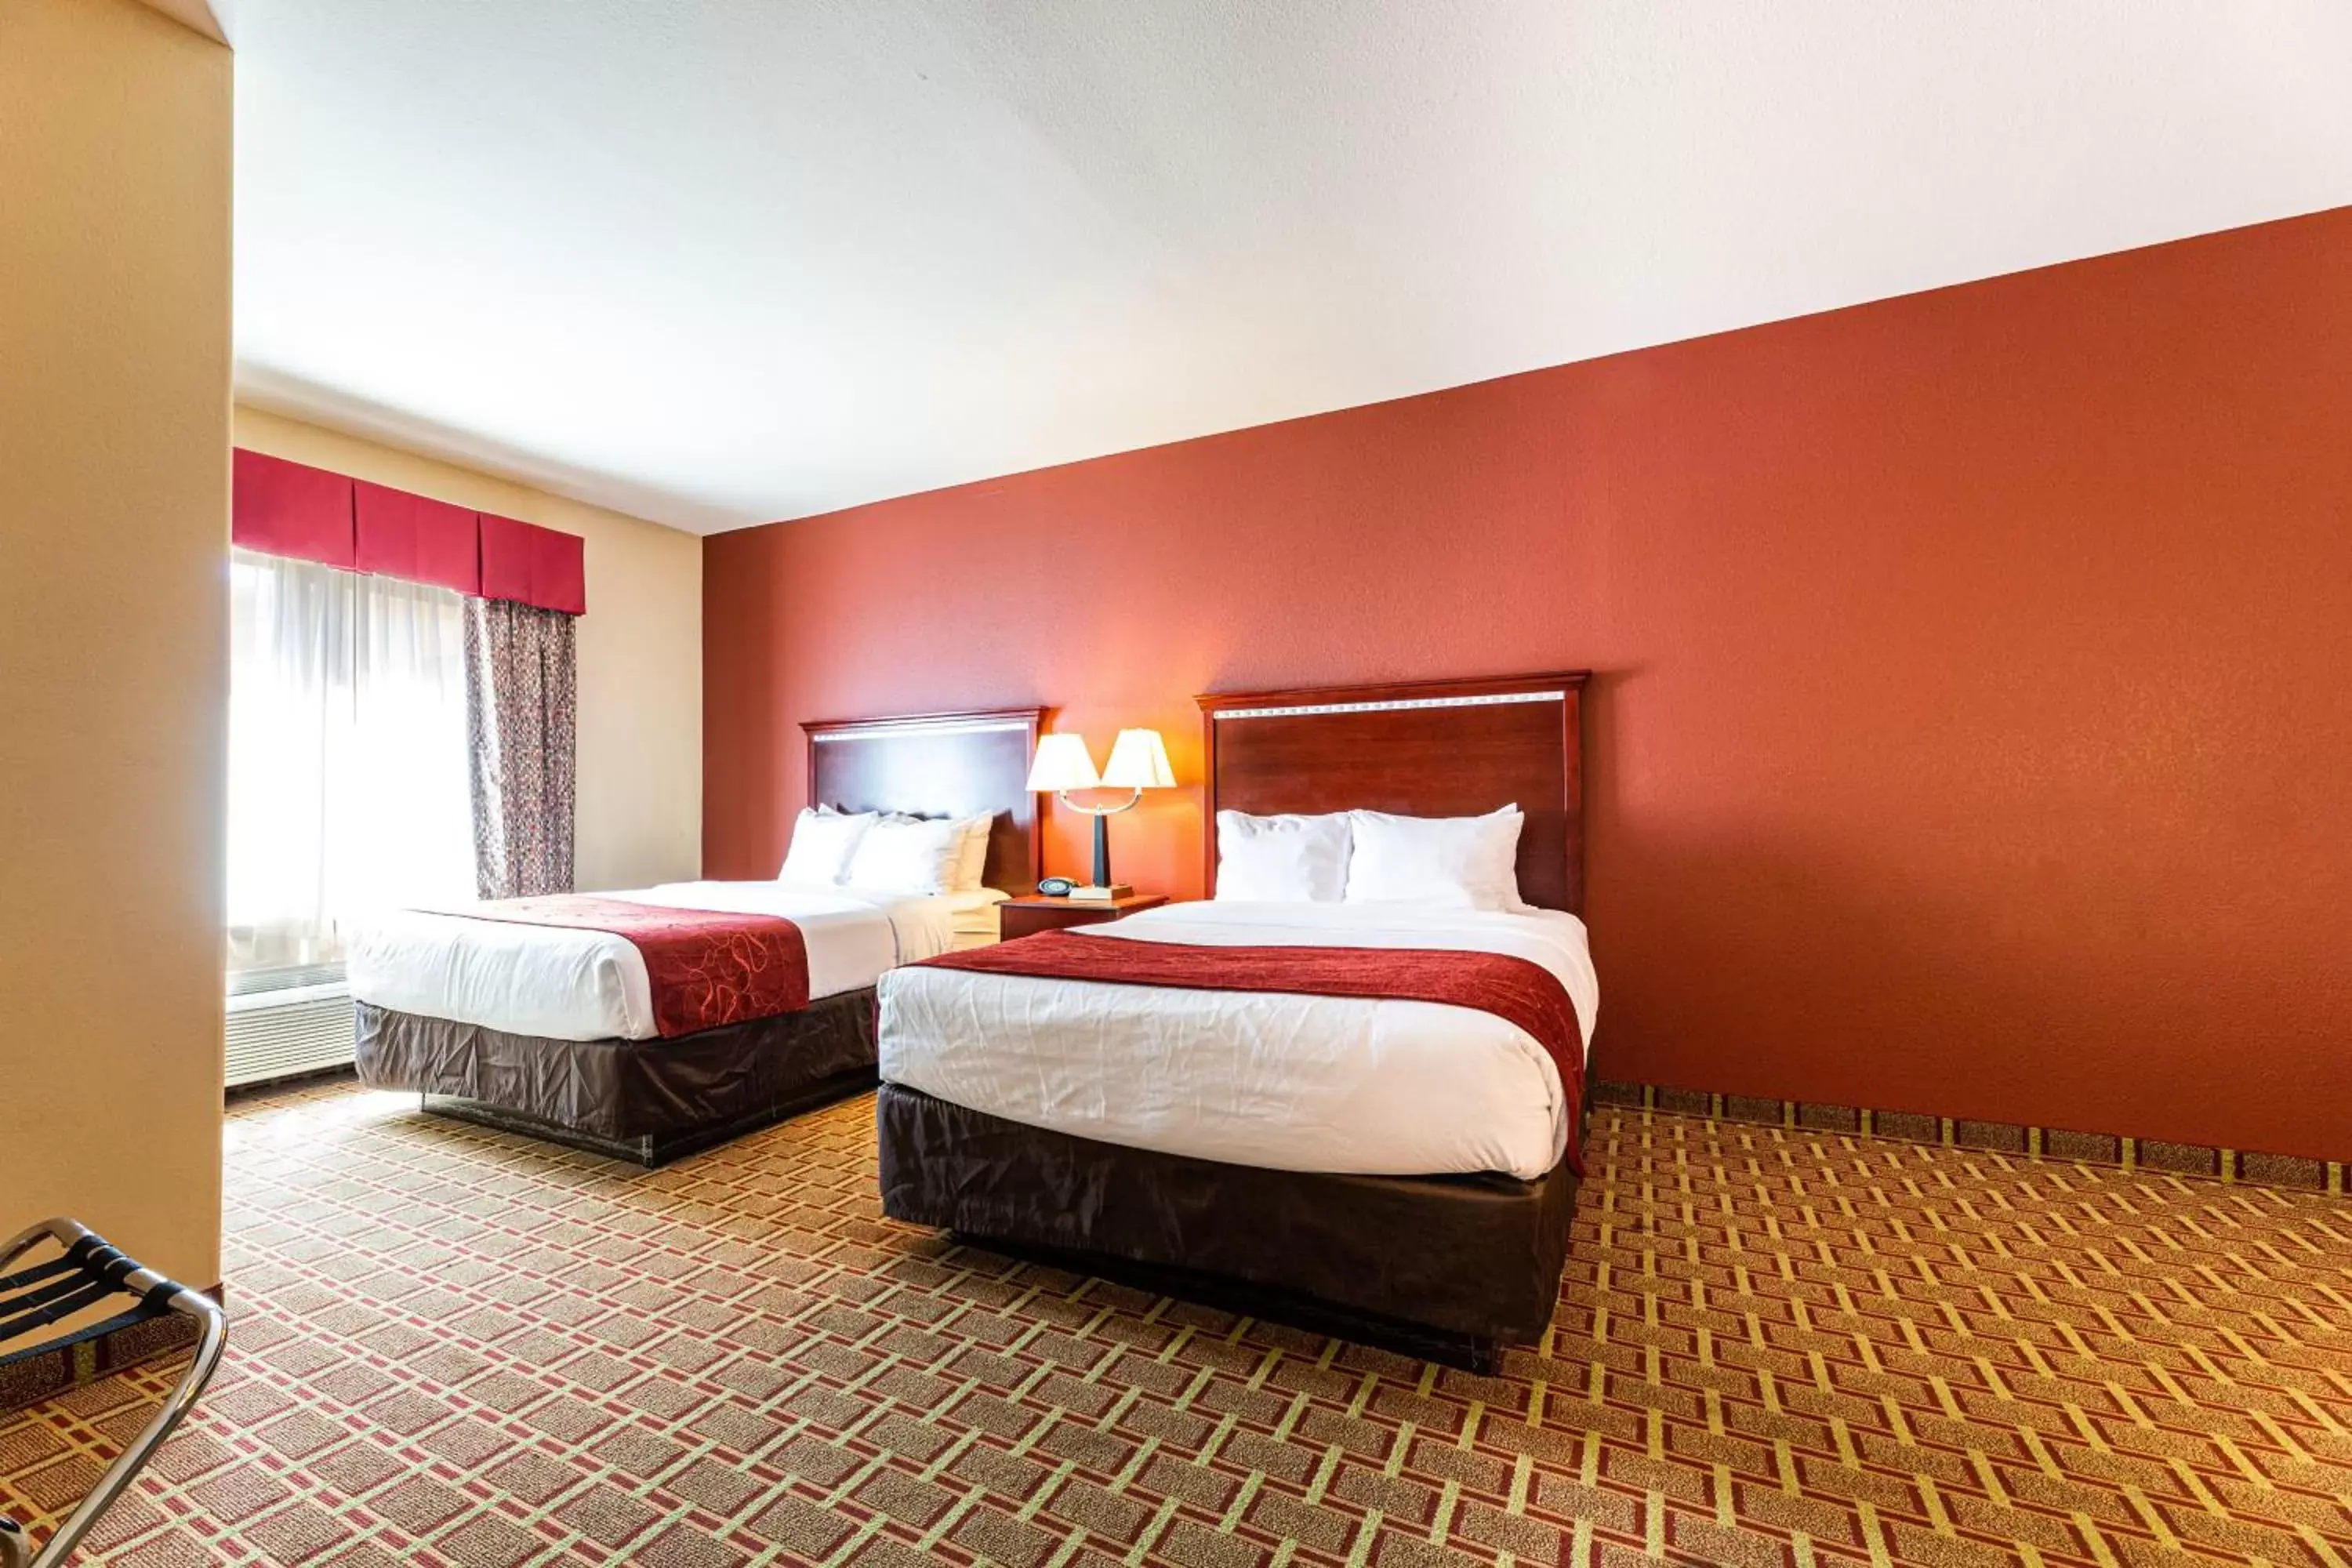 Room Photo in Comfort Suites - Lake Worth